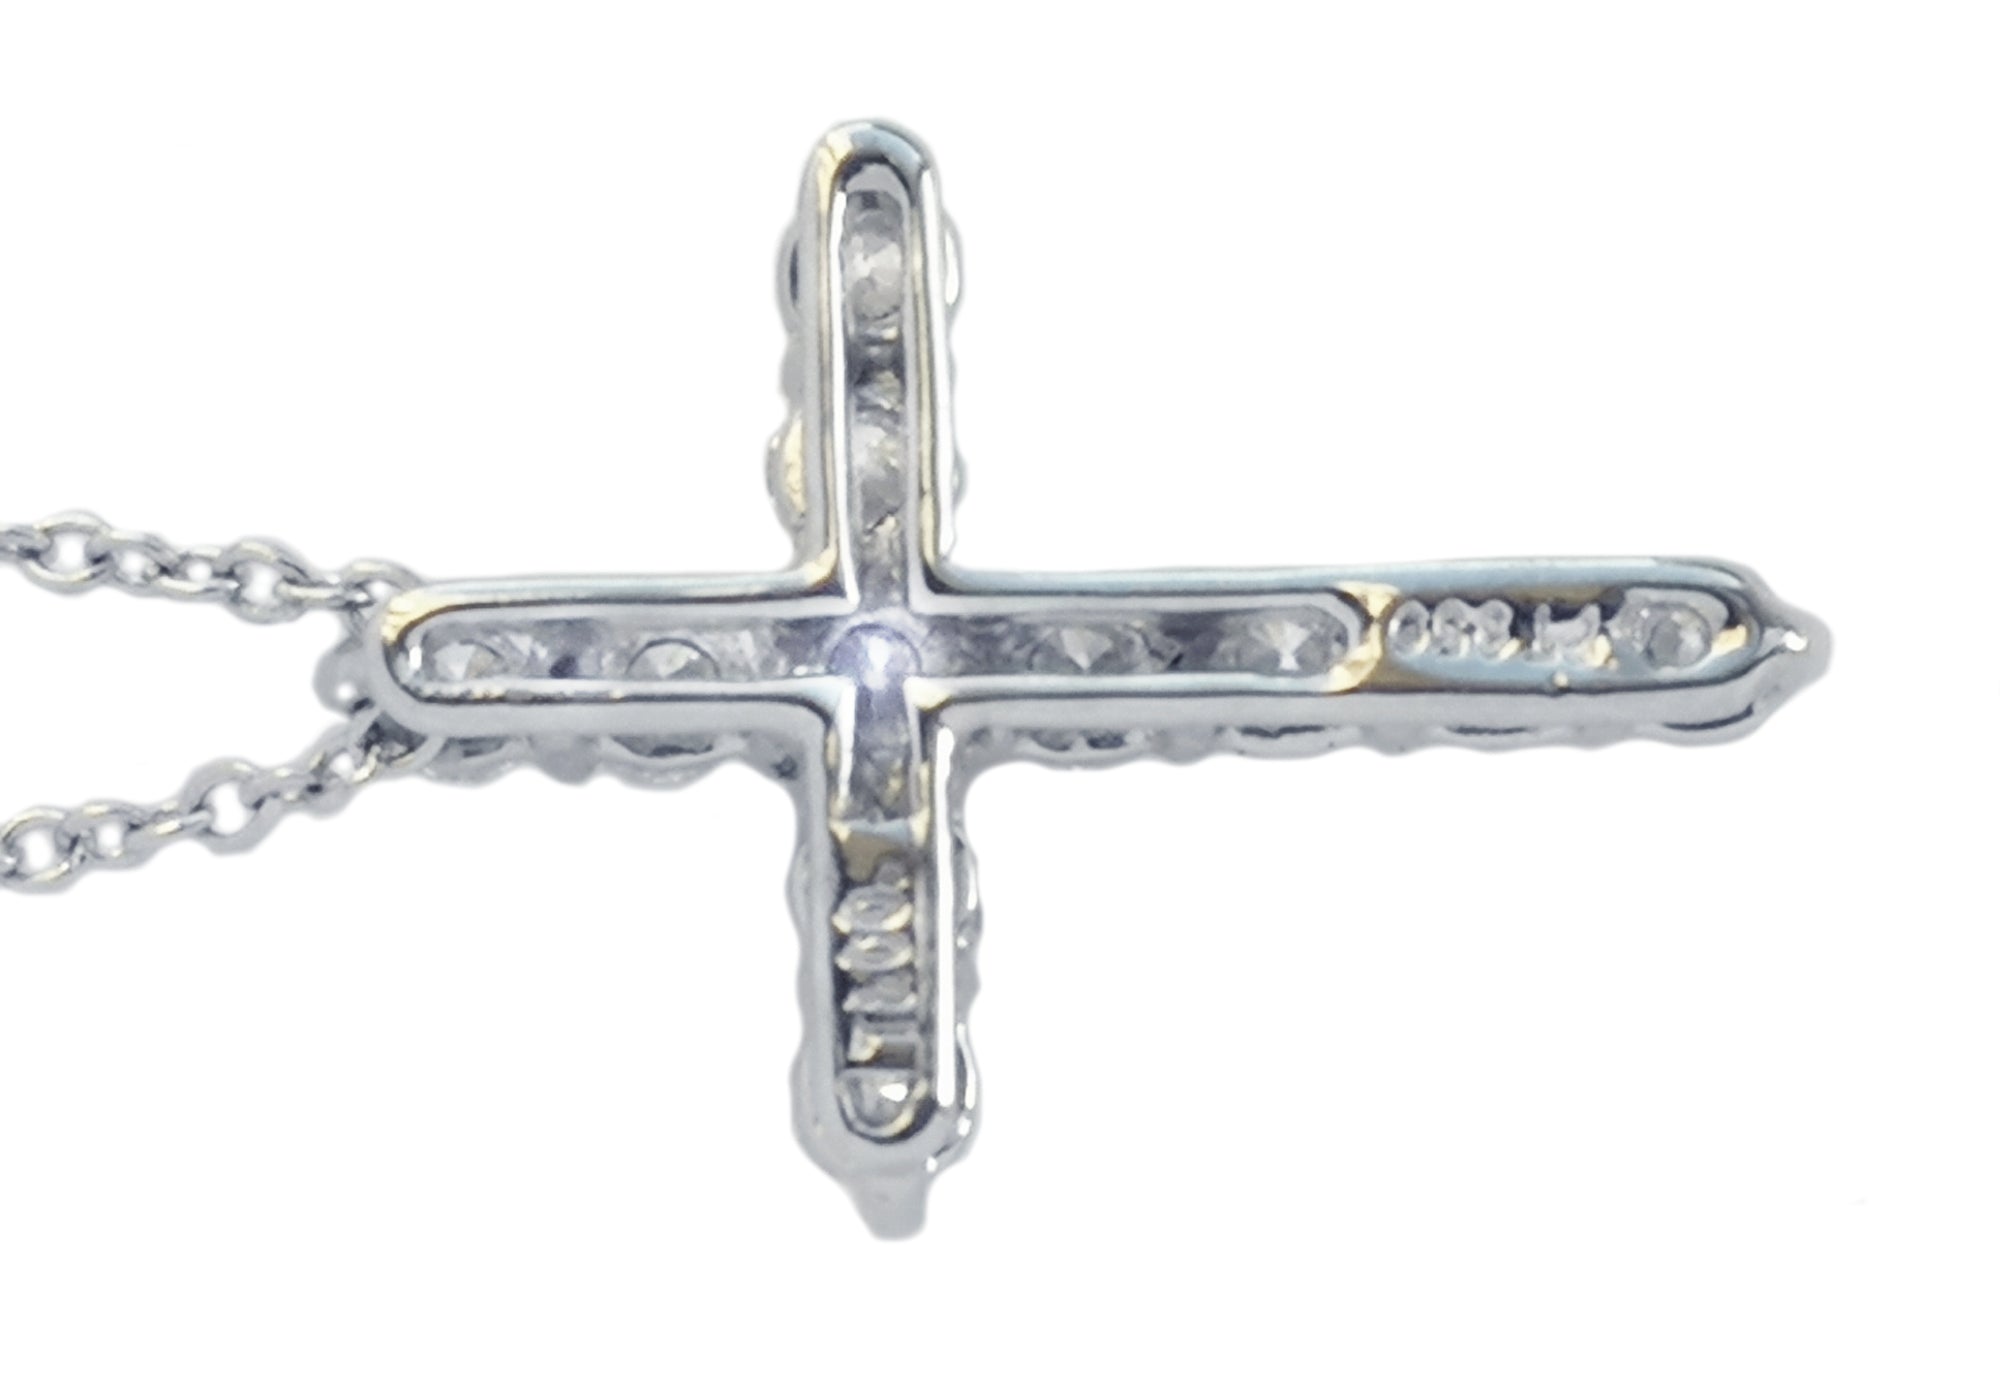 Tiffany & Co. Diamond Cross Pendant with Chain